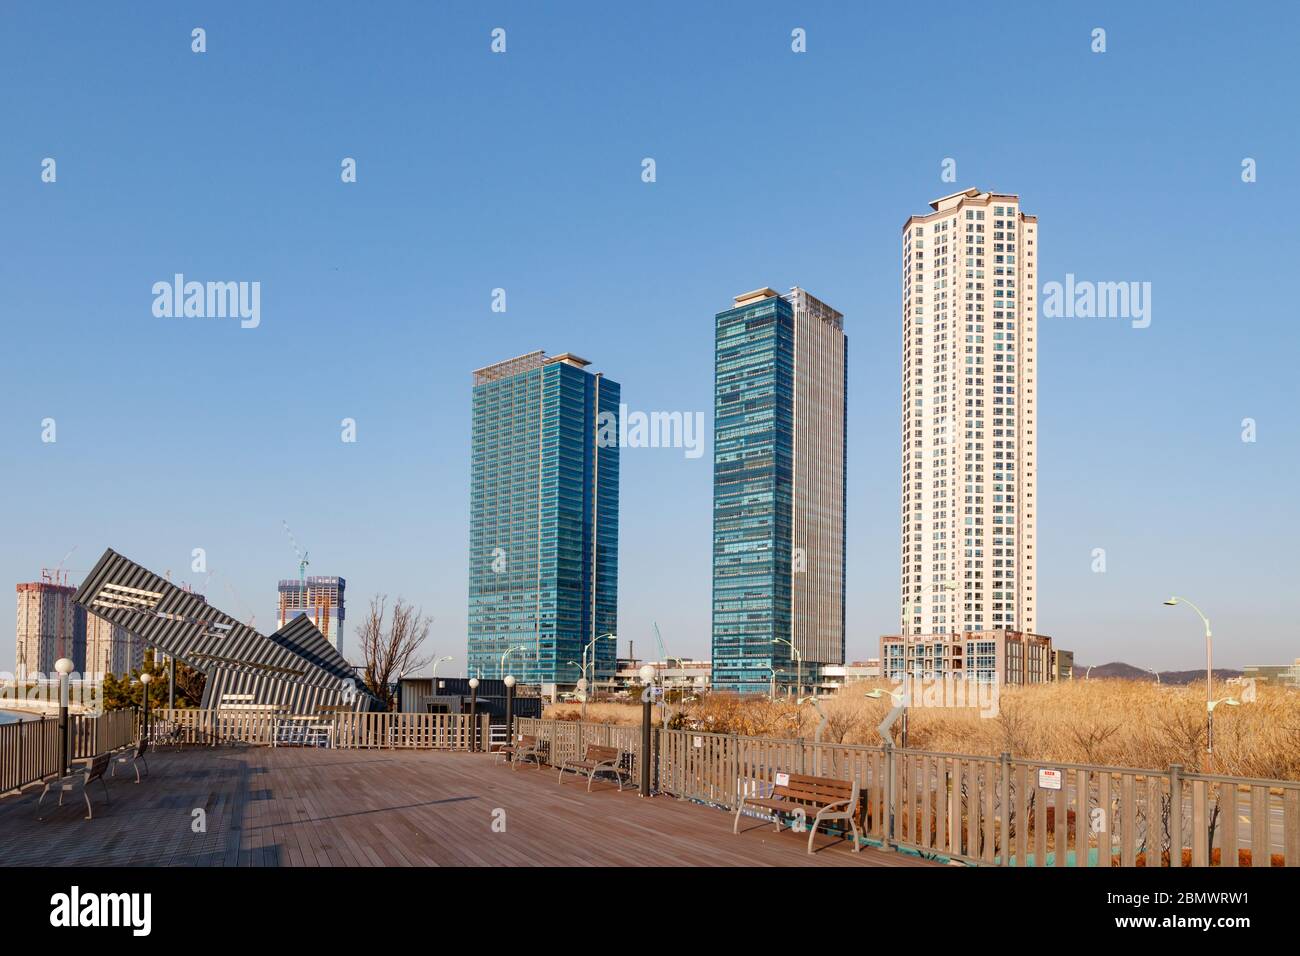 Incheon Songdo, Korea, 14 Jan 2020 - Incheon Songdo International City Landscape. Apartment and building scenery. Stock Photo